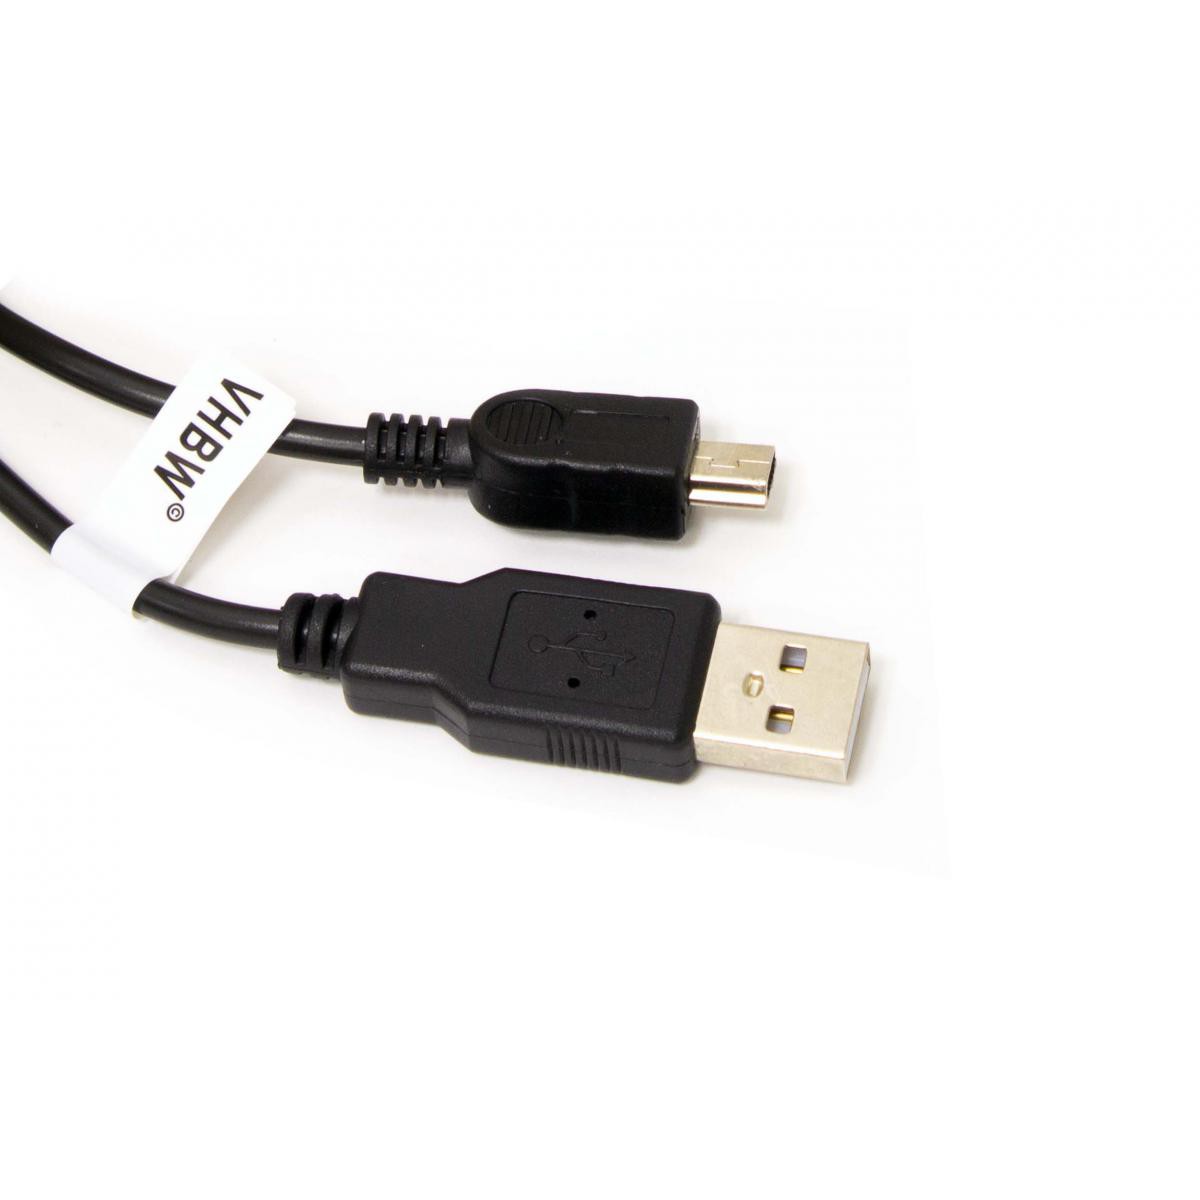 Vhbw - Câble USB A-Mini-B 5 pôles noir/black, longueur 1m, pour PANASONIC - Câble antenne